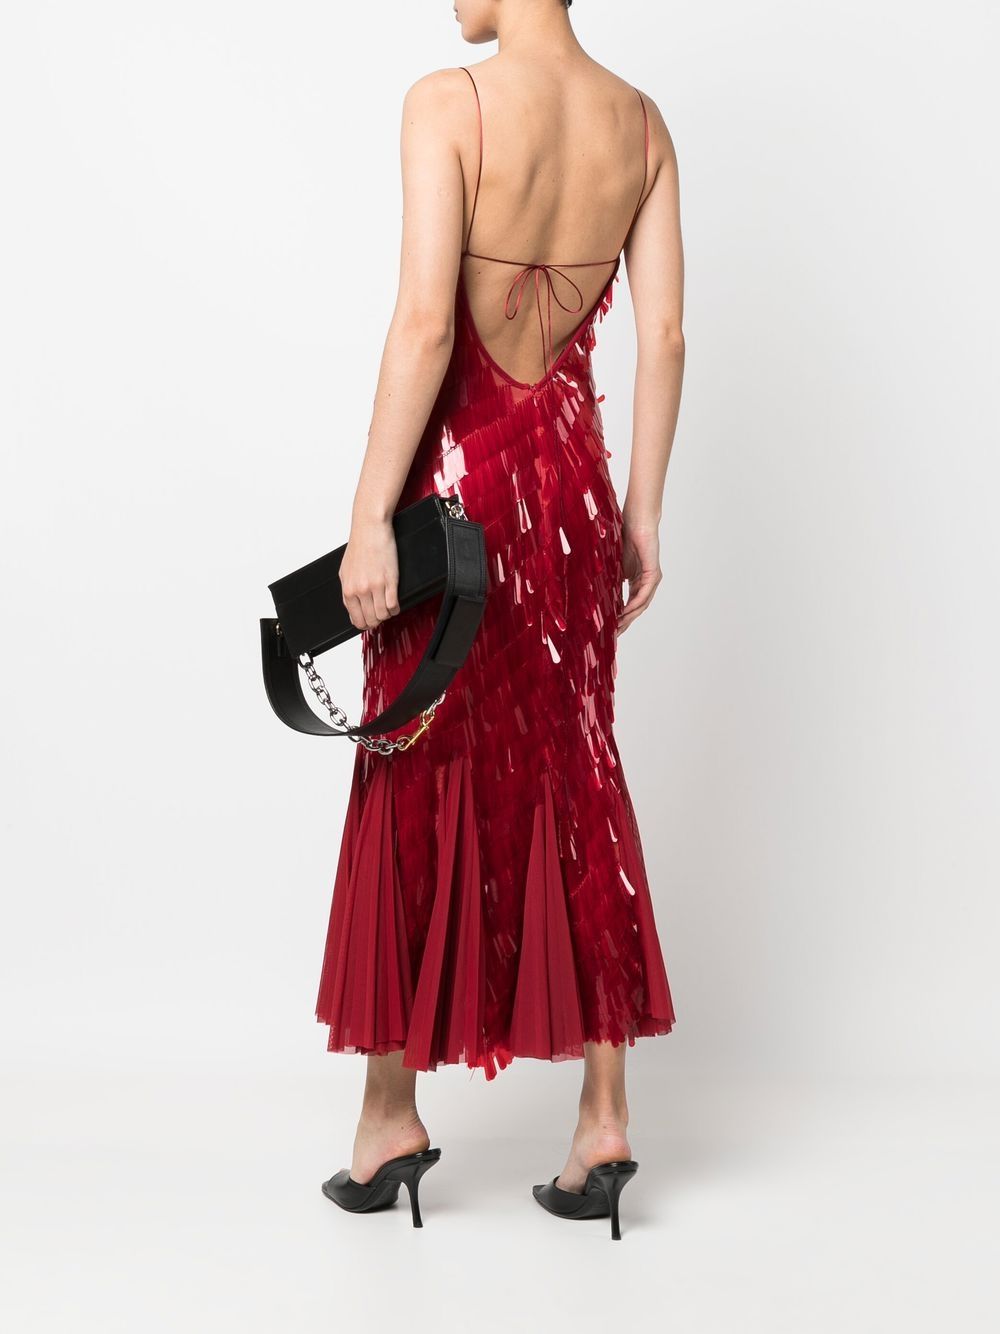 Atu Body Couture Comet Sequinned Dress - Farfetch